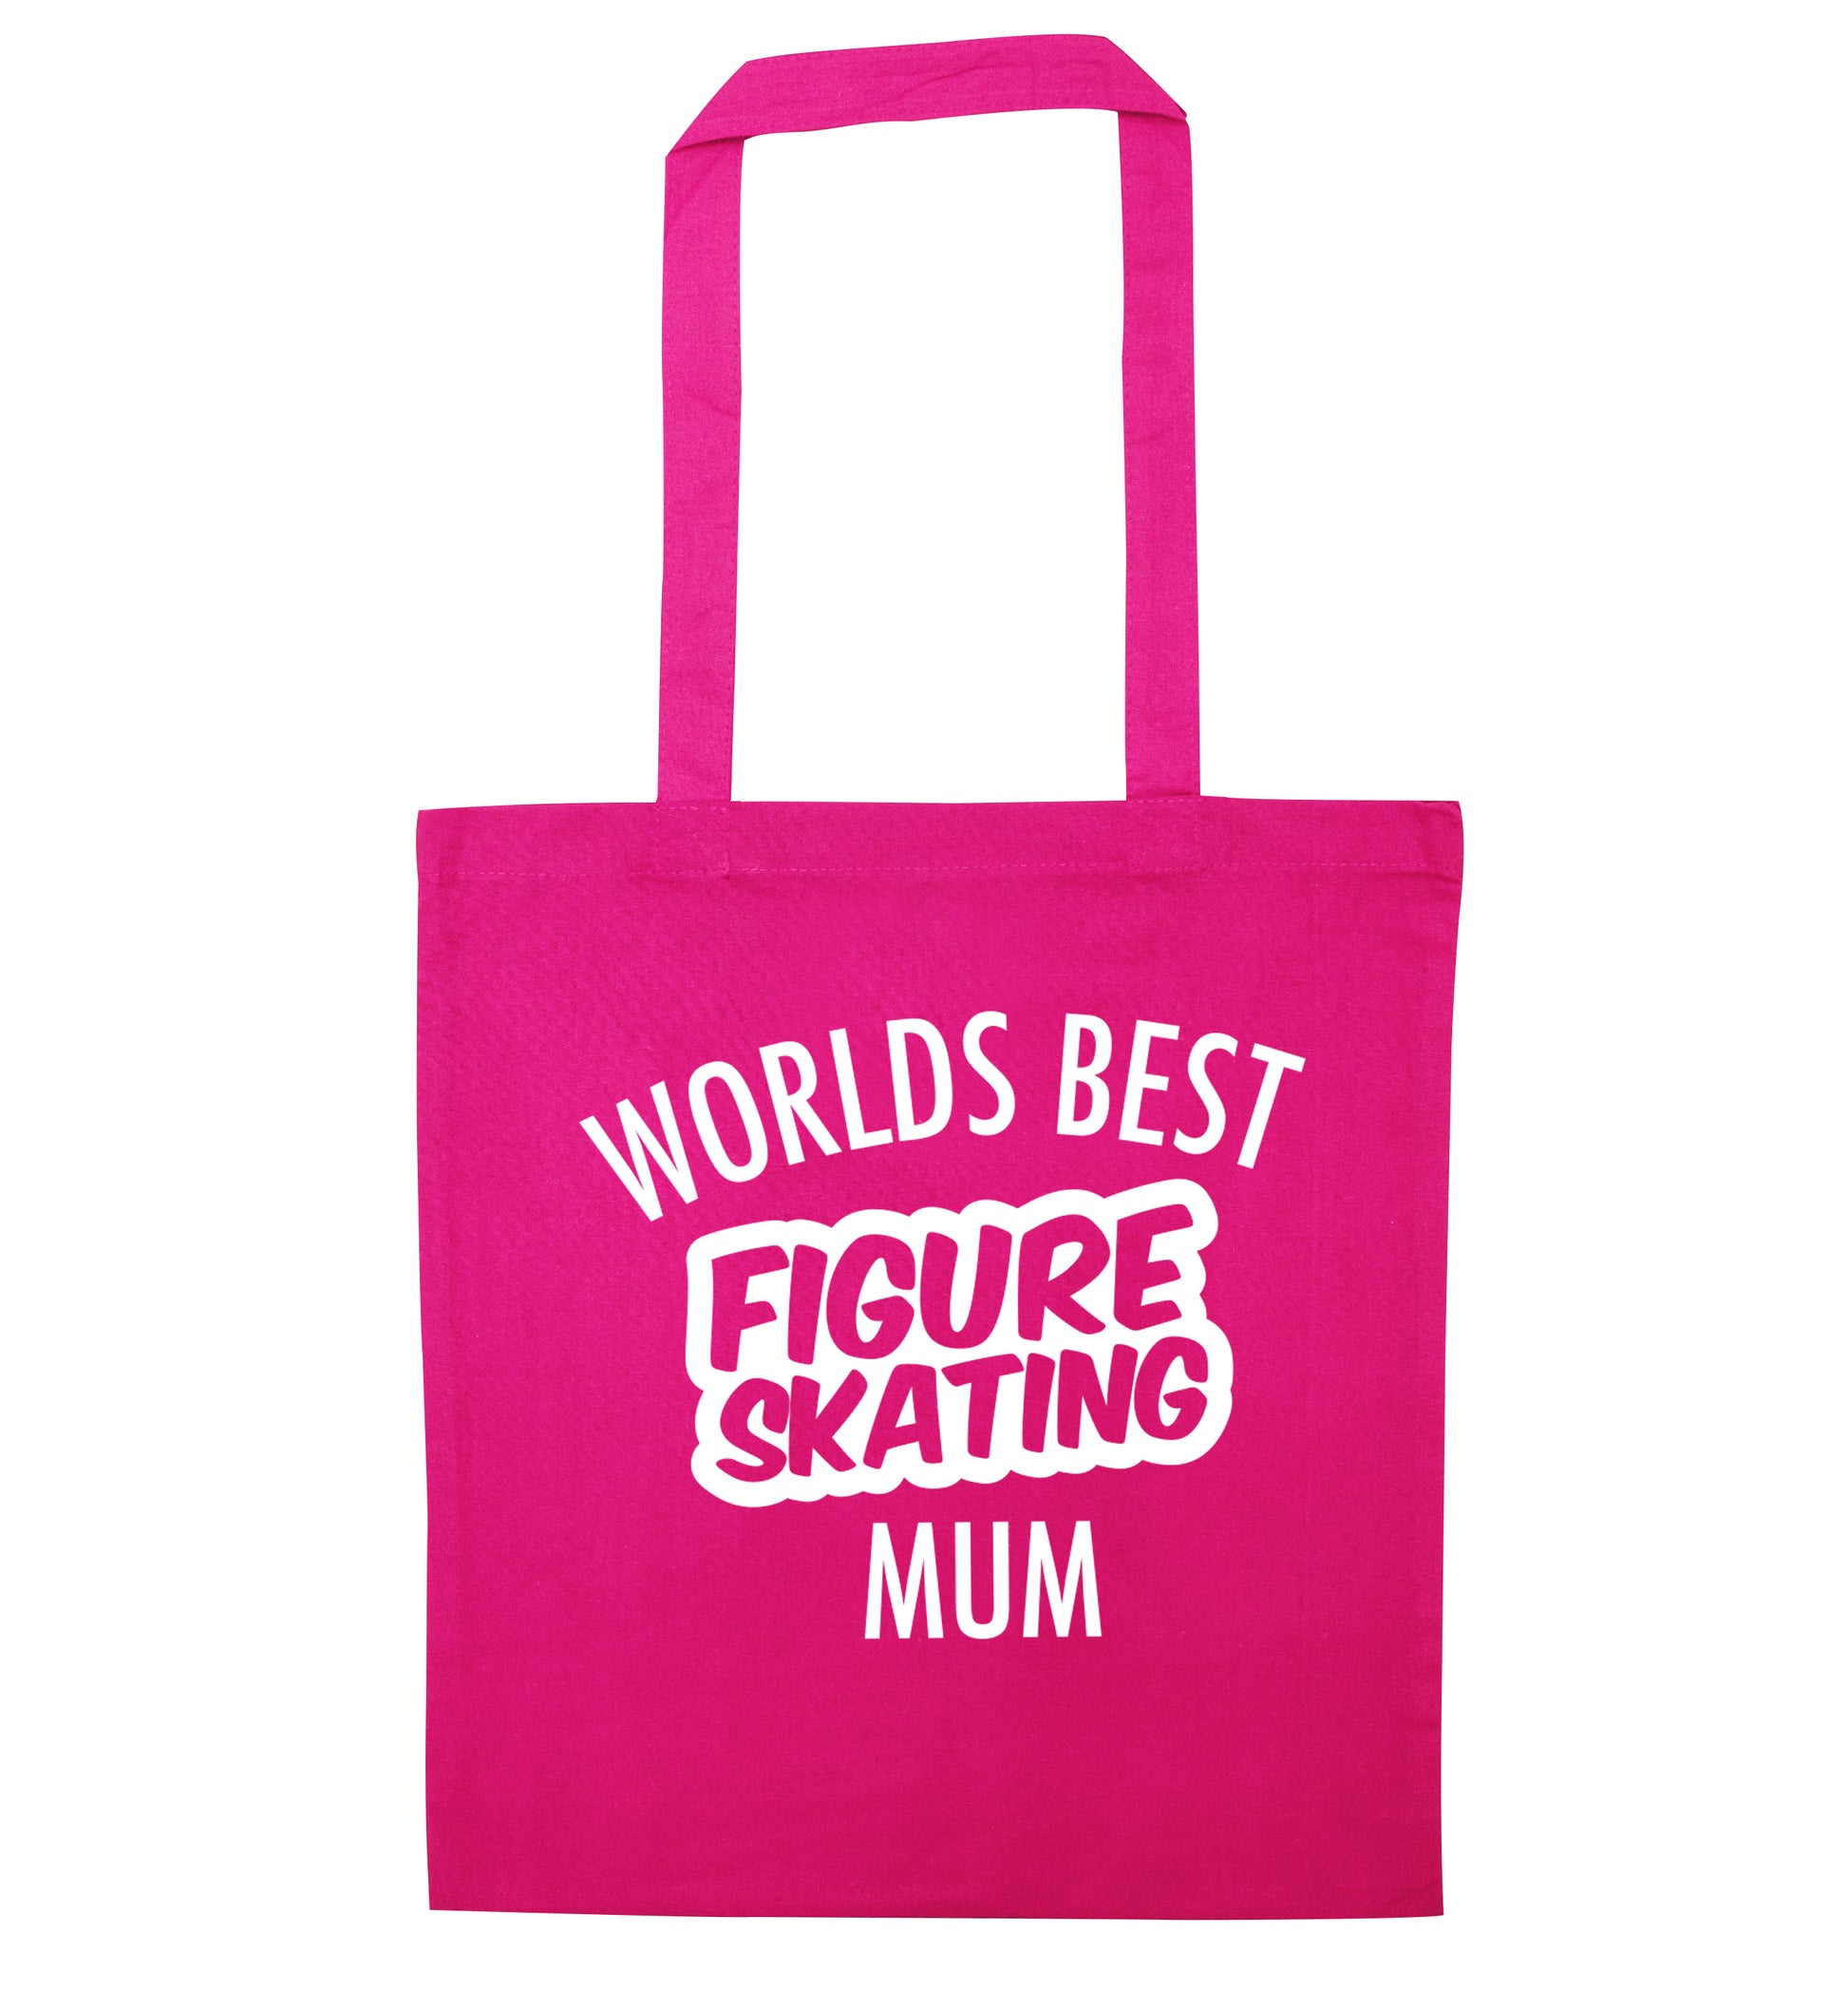 Worlds best figure skating mum pink tote bag